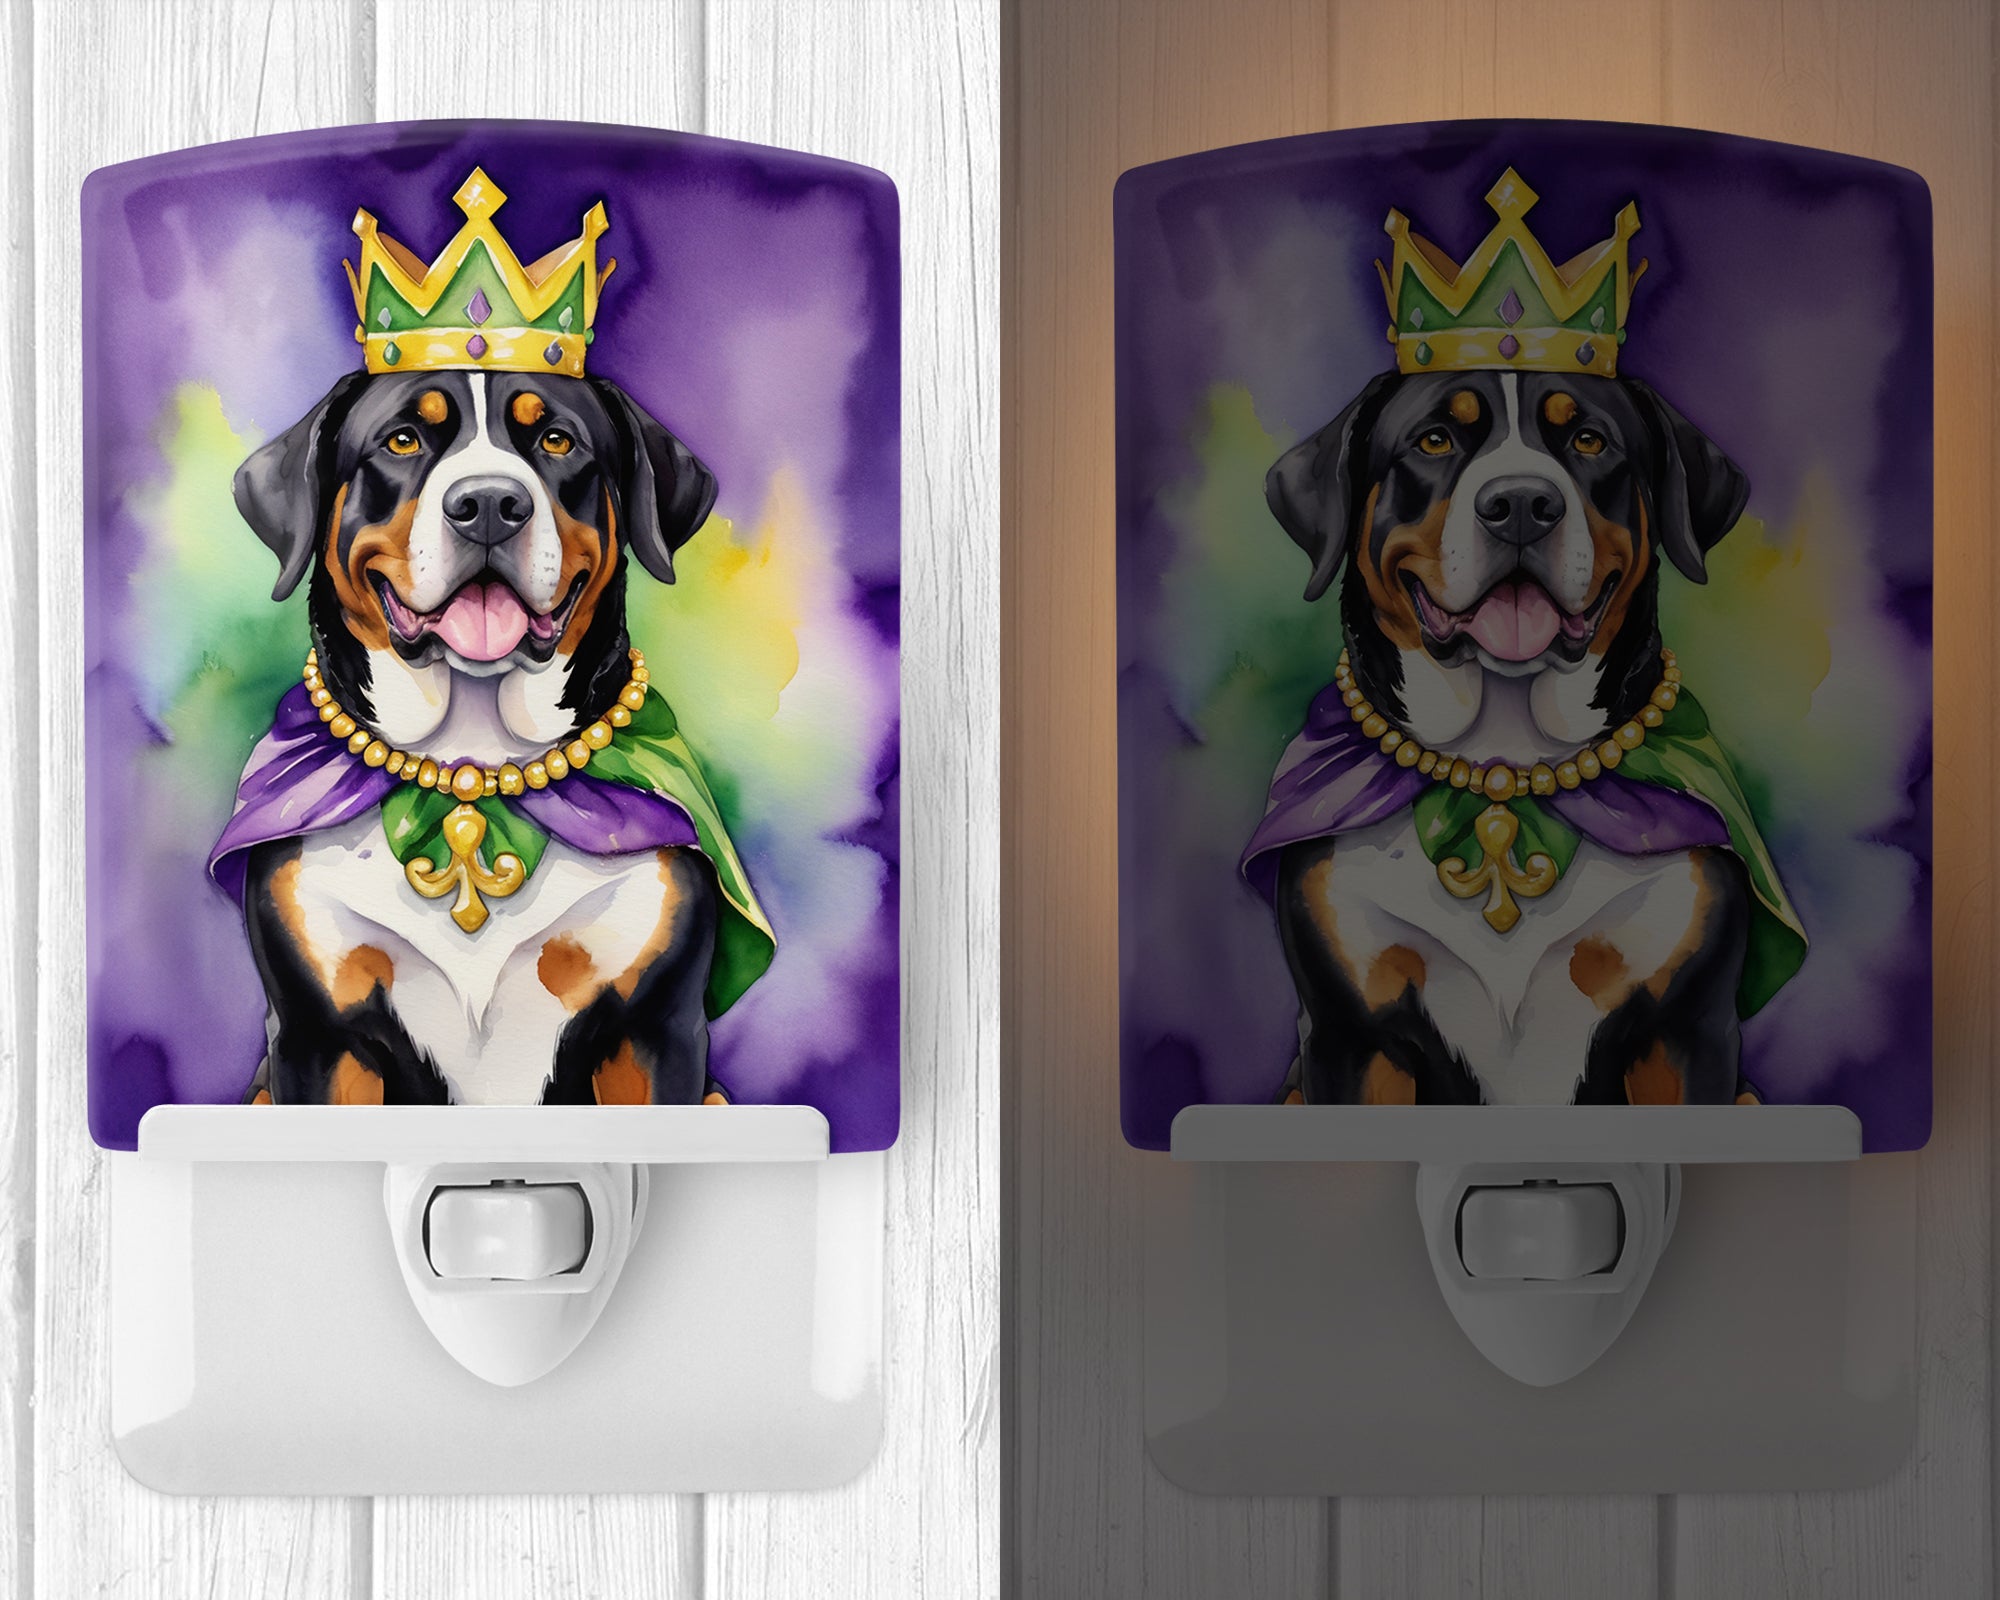 Buy this Greater Swiss Mountain Dog King of Mardi Gras Ceramic Night Light